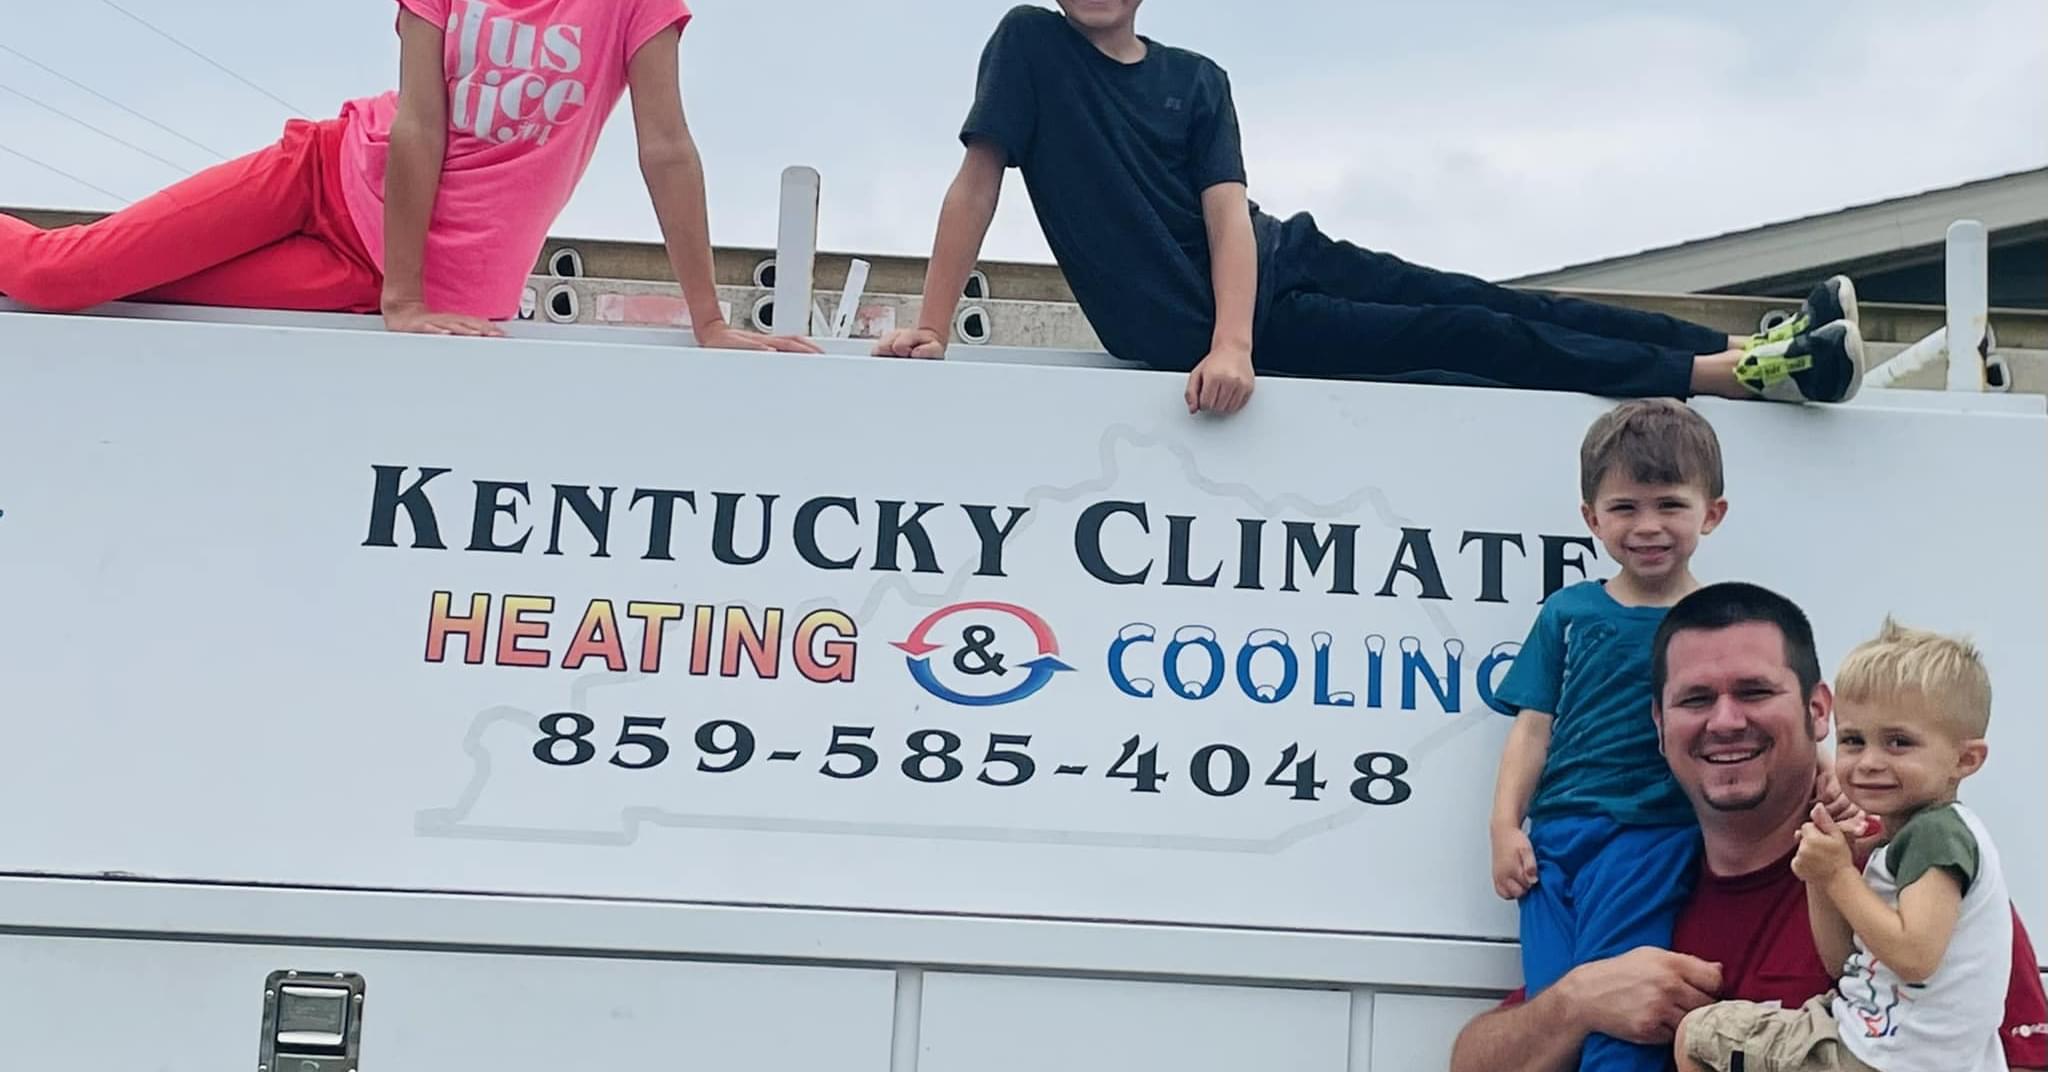 Kentucky Climate Heating & Cooling 2600 Sharkey Rd, Morehead Kentucky 40351